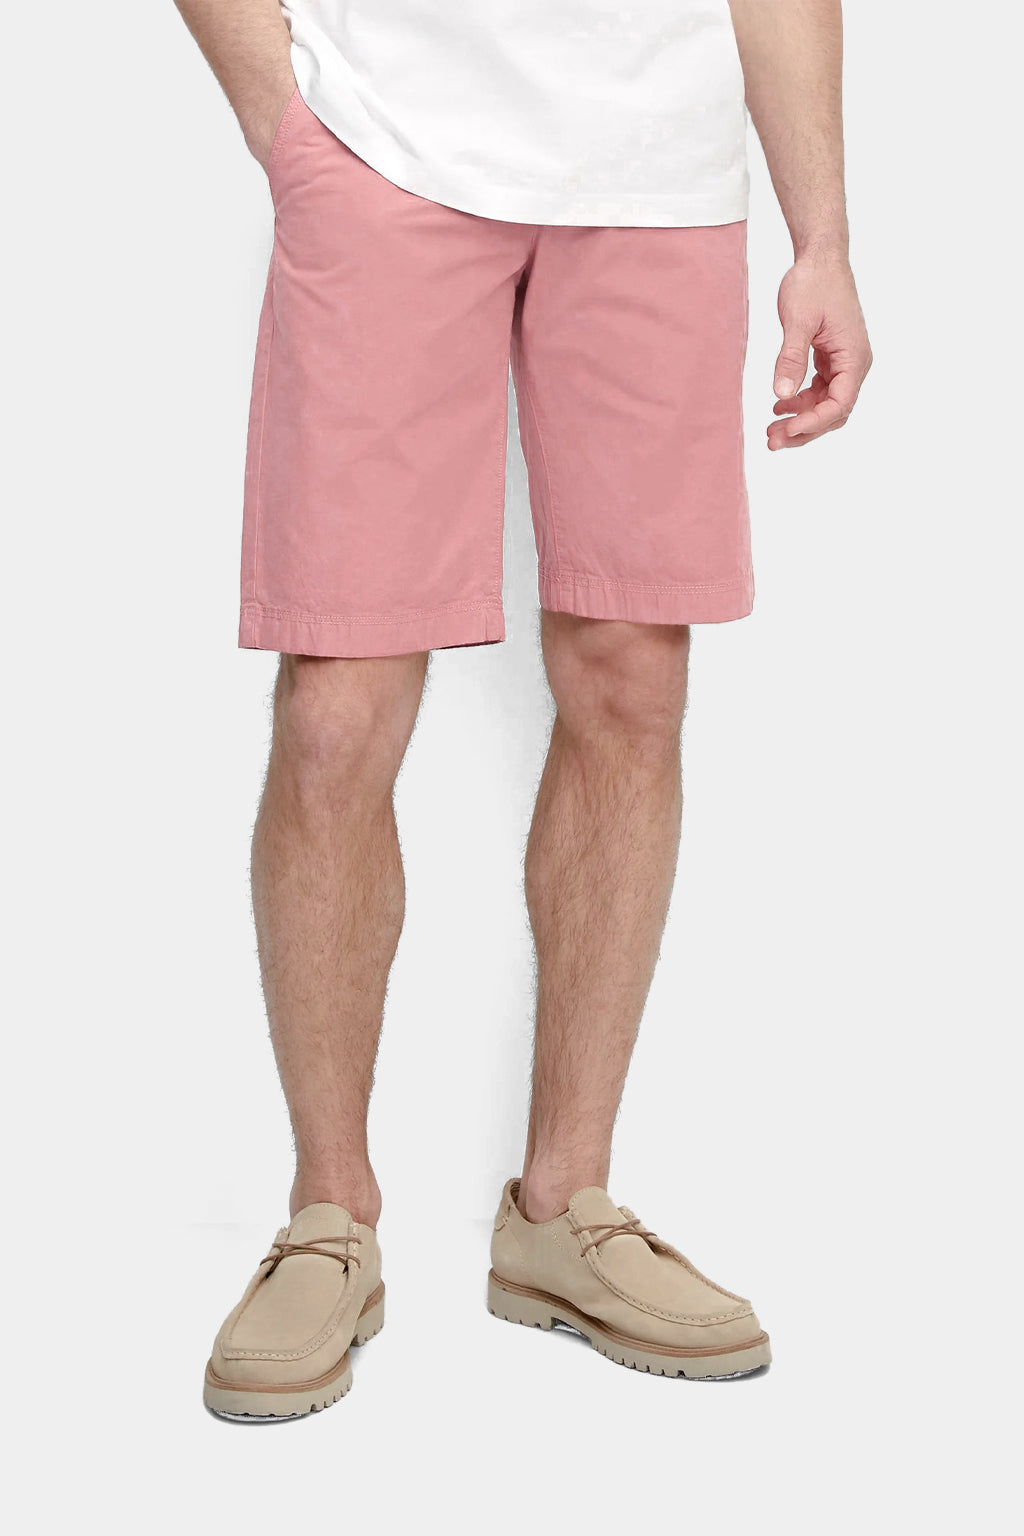 Marc O'Polo - Shorts